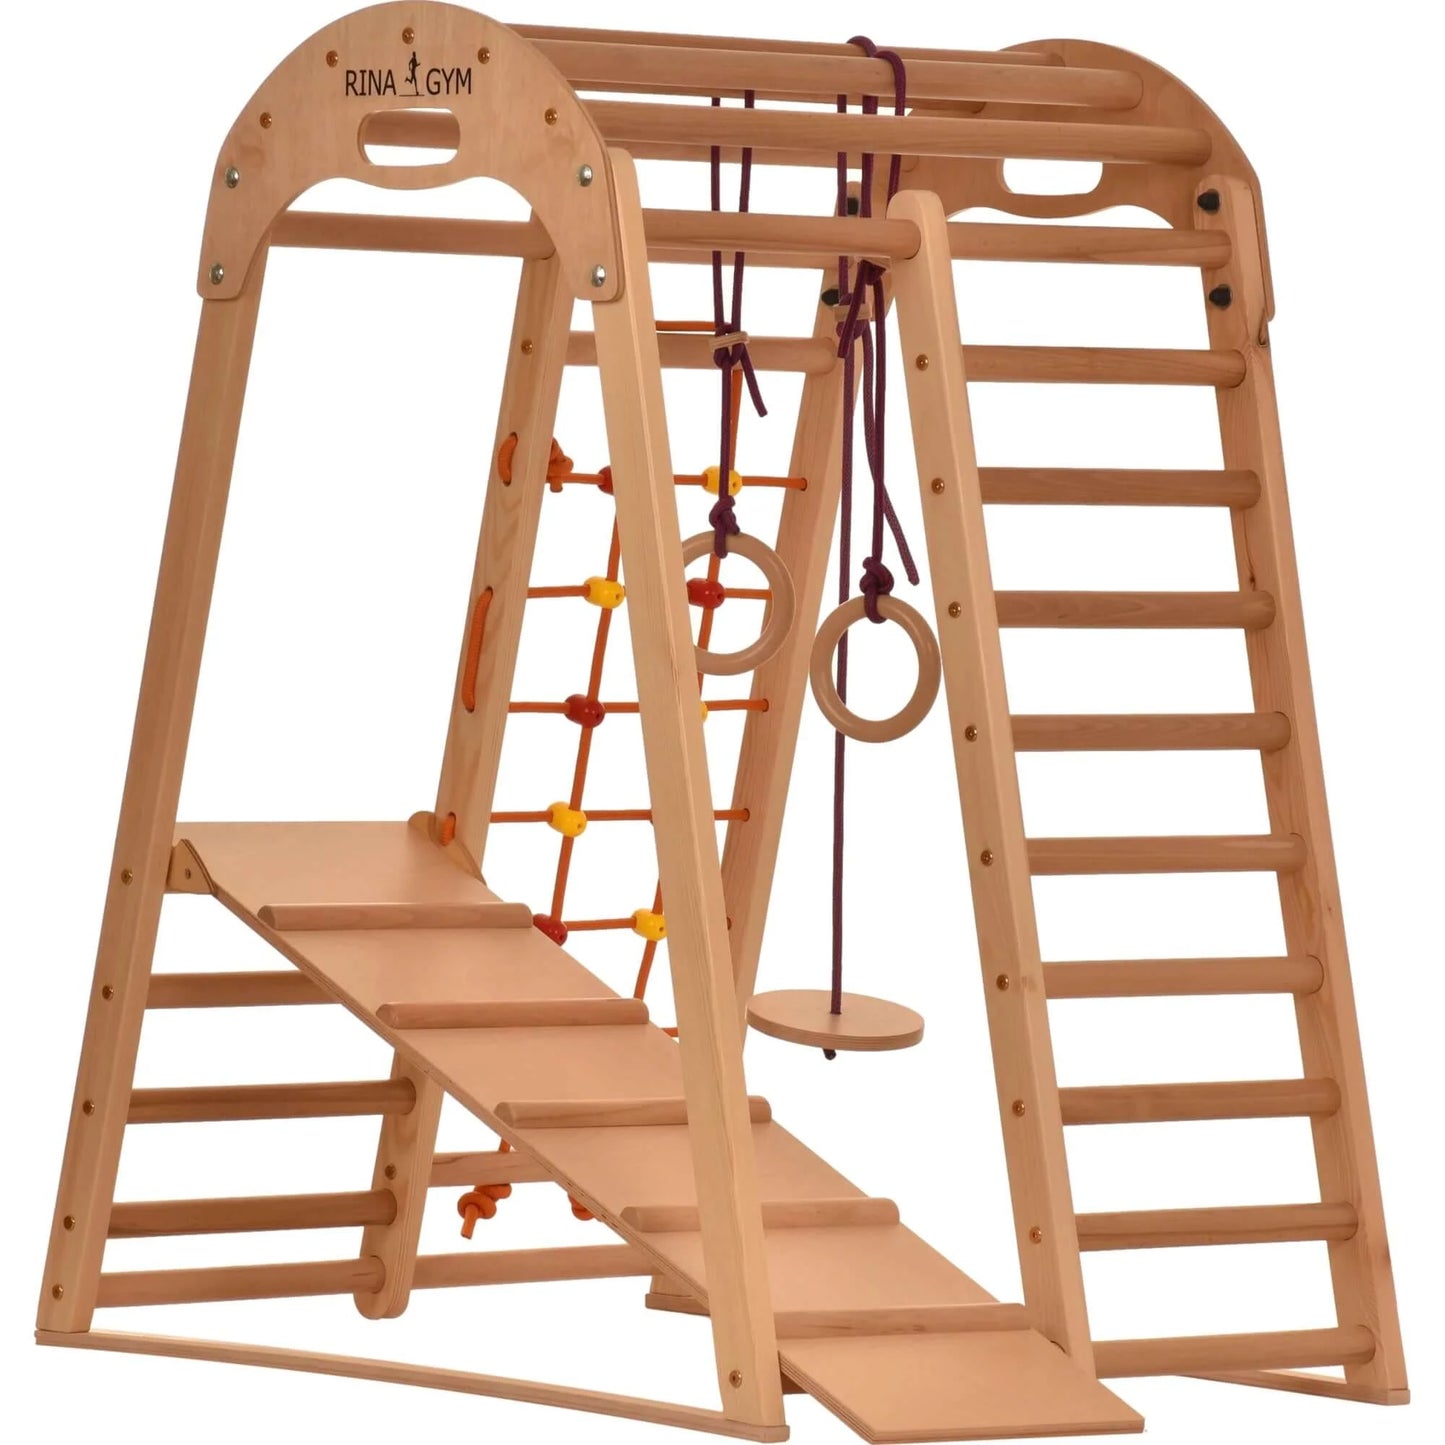 Indoor playground made of wood - climbing net, Swedish ladder, rings, slide